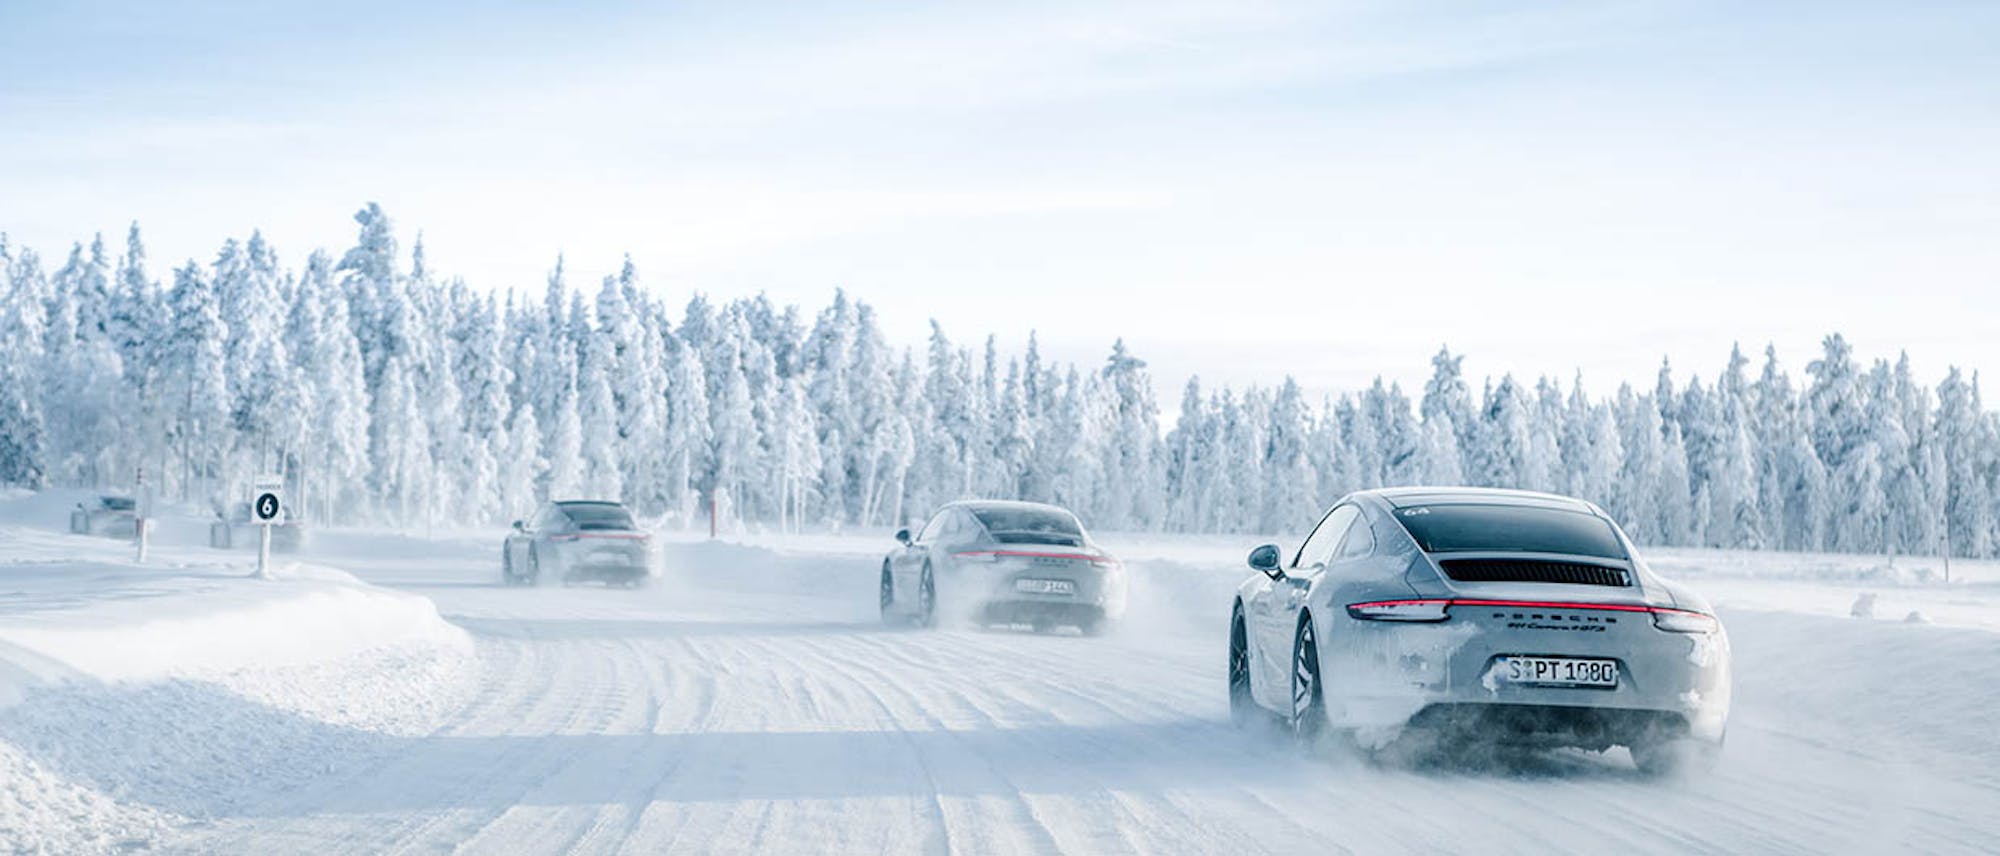 5 grey Porsche 911 Carrera 4 GTS driving on snow in snowy landscape